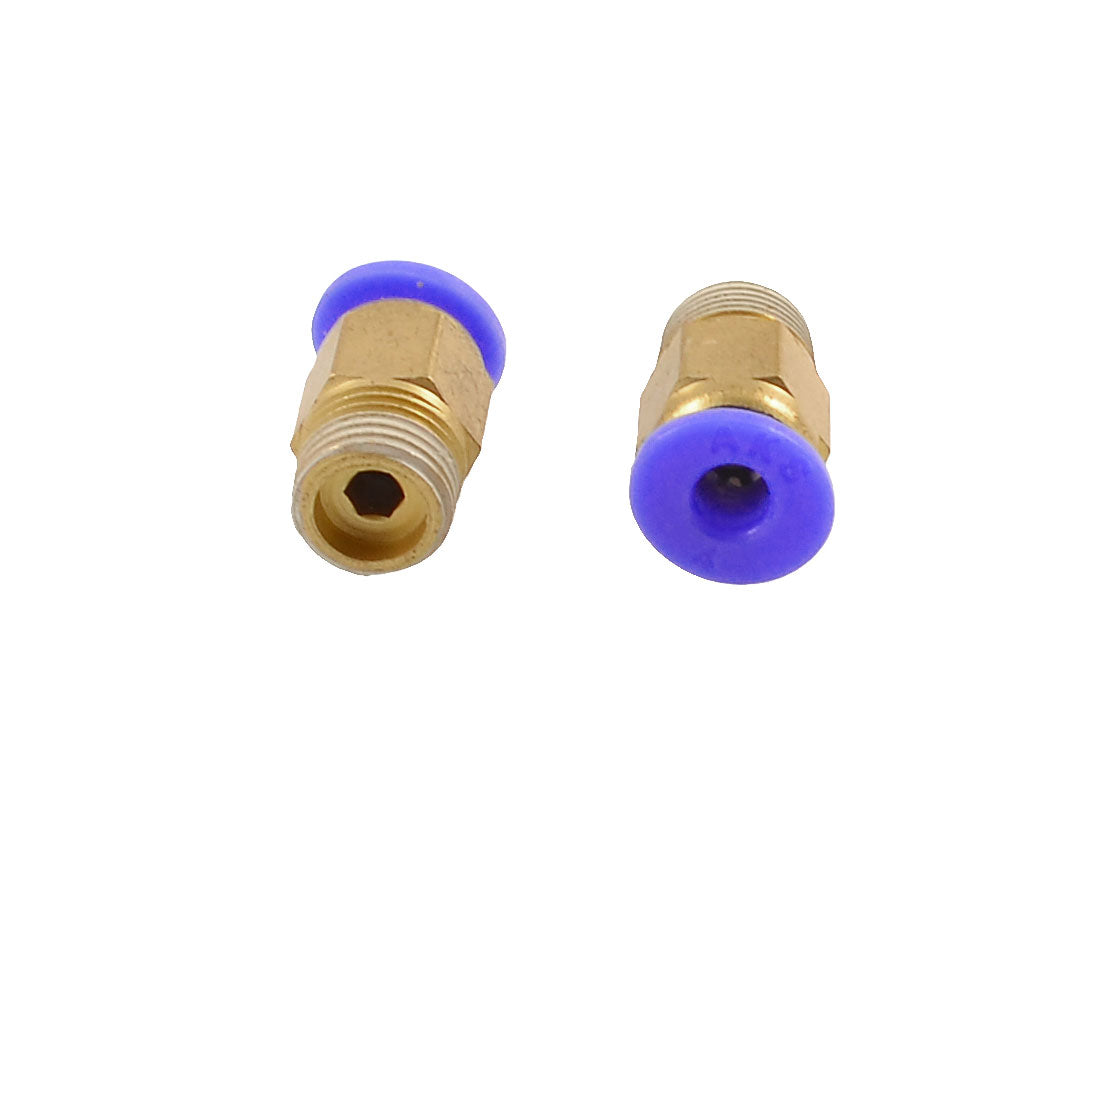 Pneumatic koppling till PTFE Bowden Tube 4mm - 1.75mm filament - PC6-01